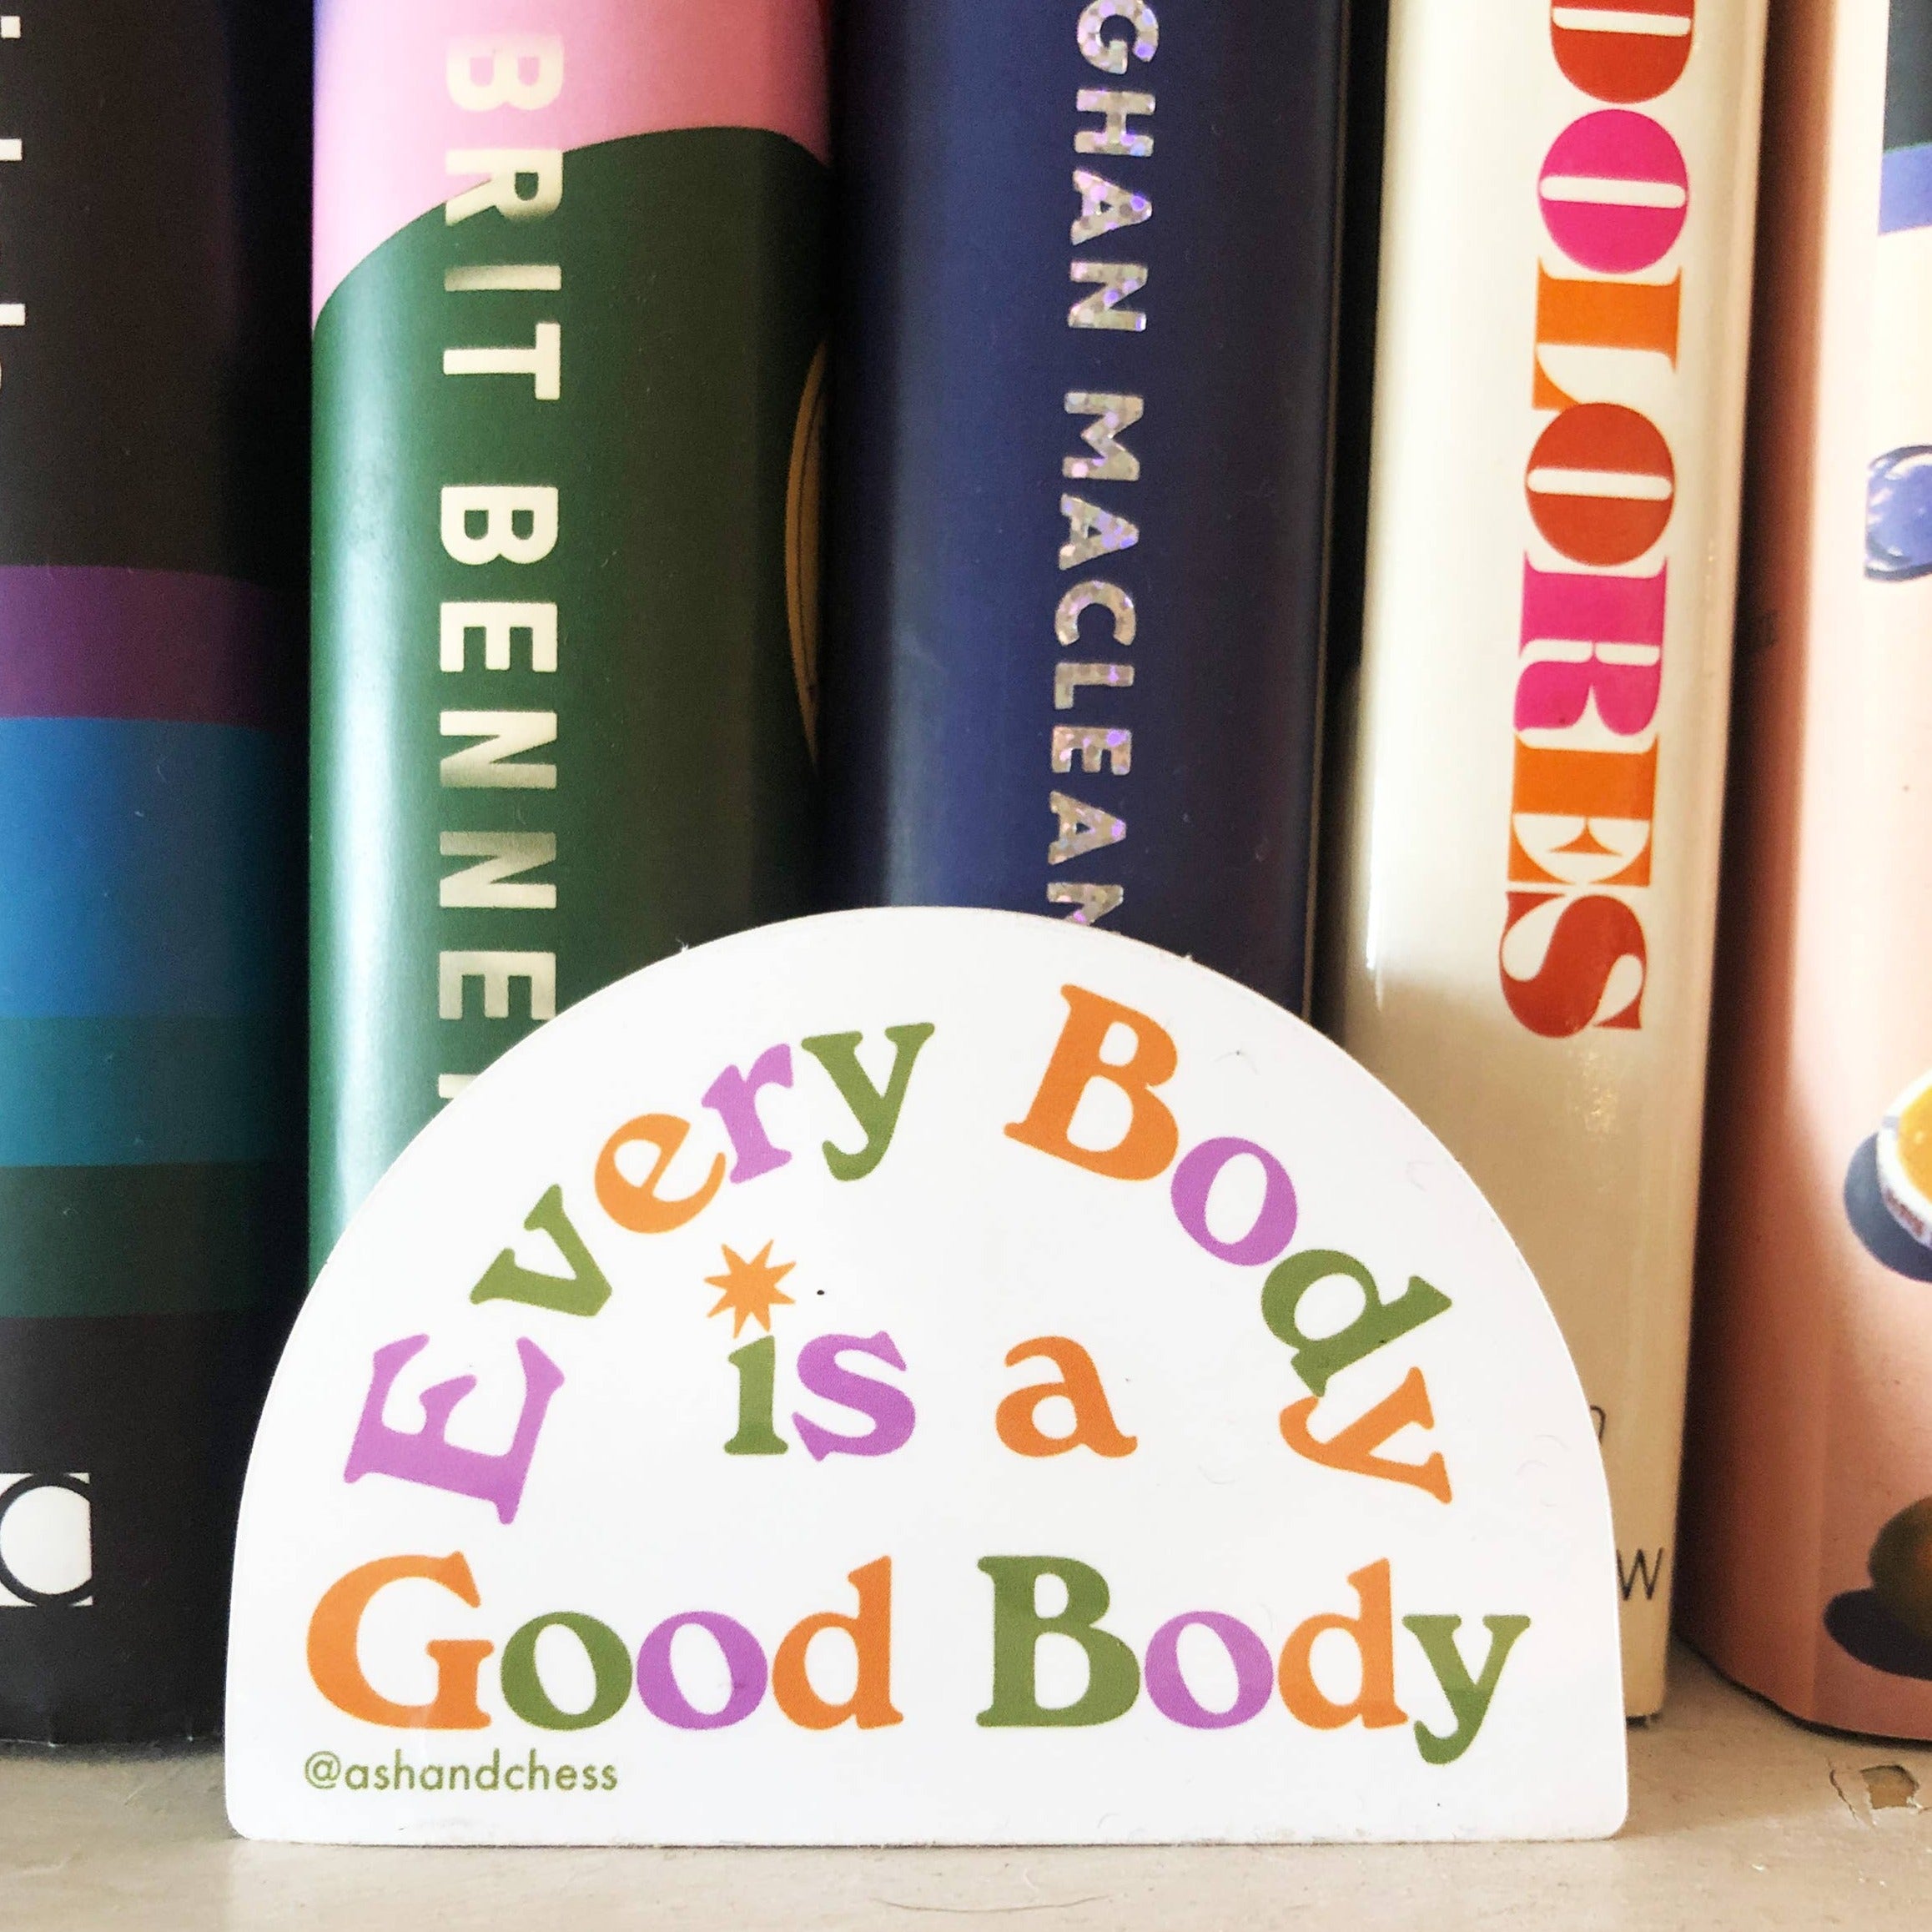 Every Body Is A Good Body Sticker